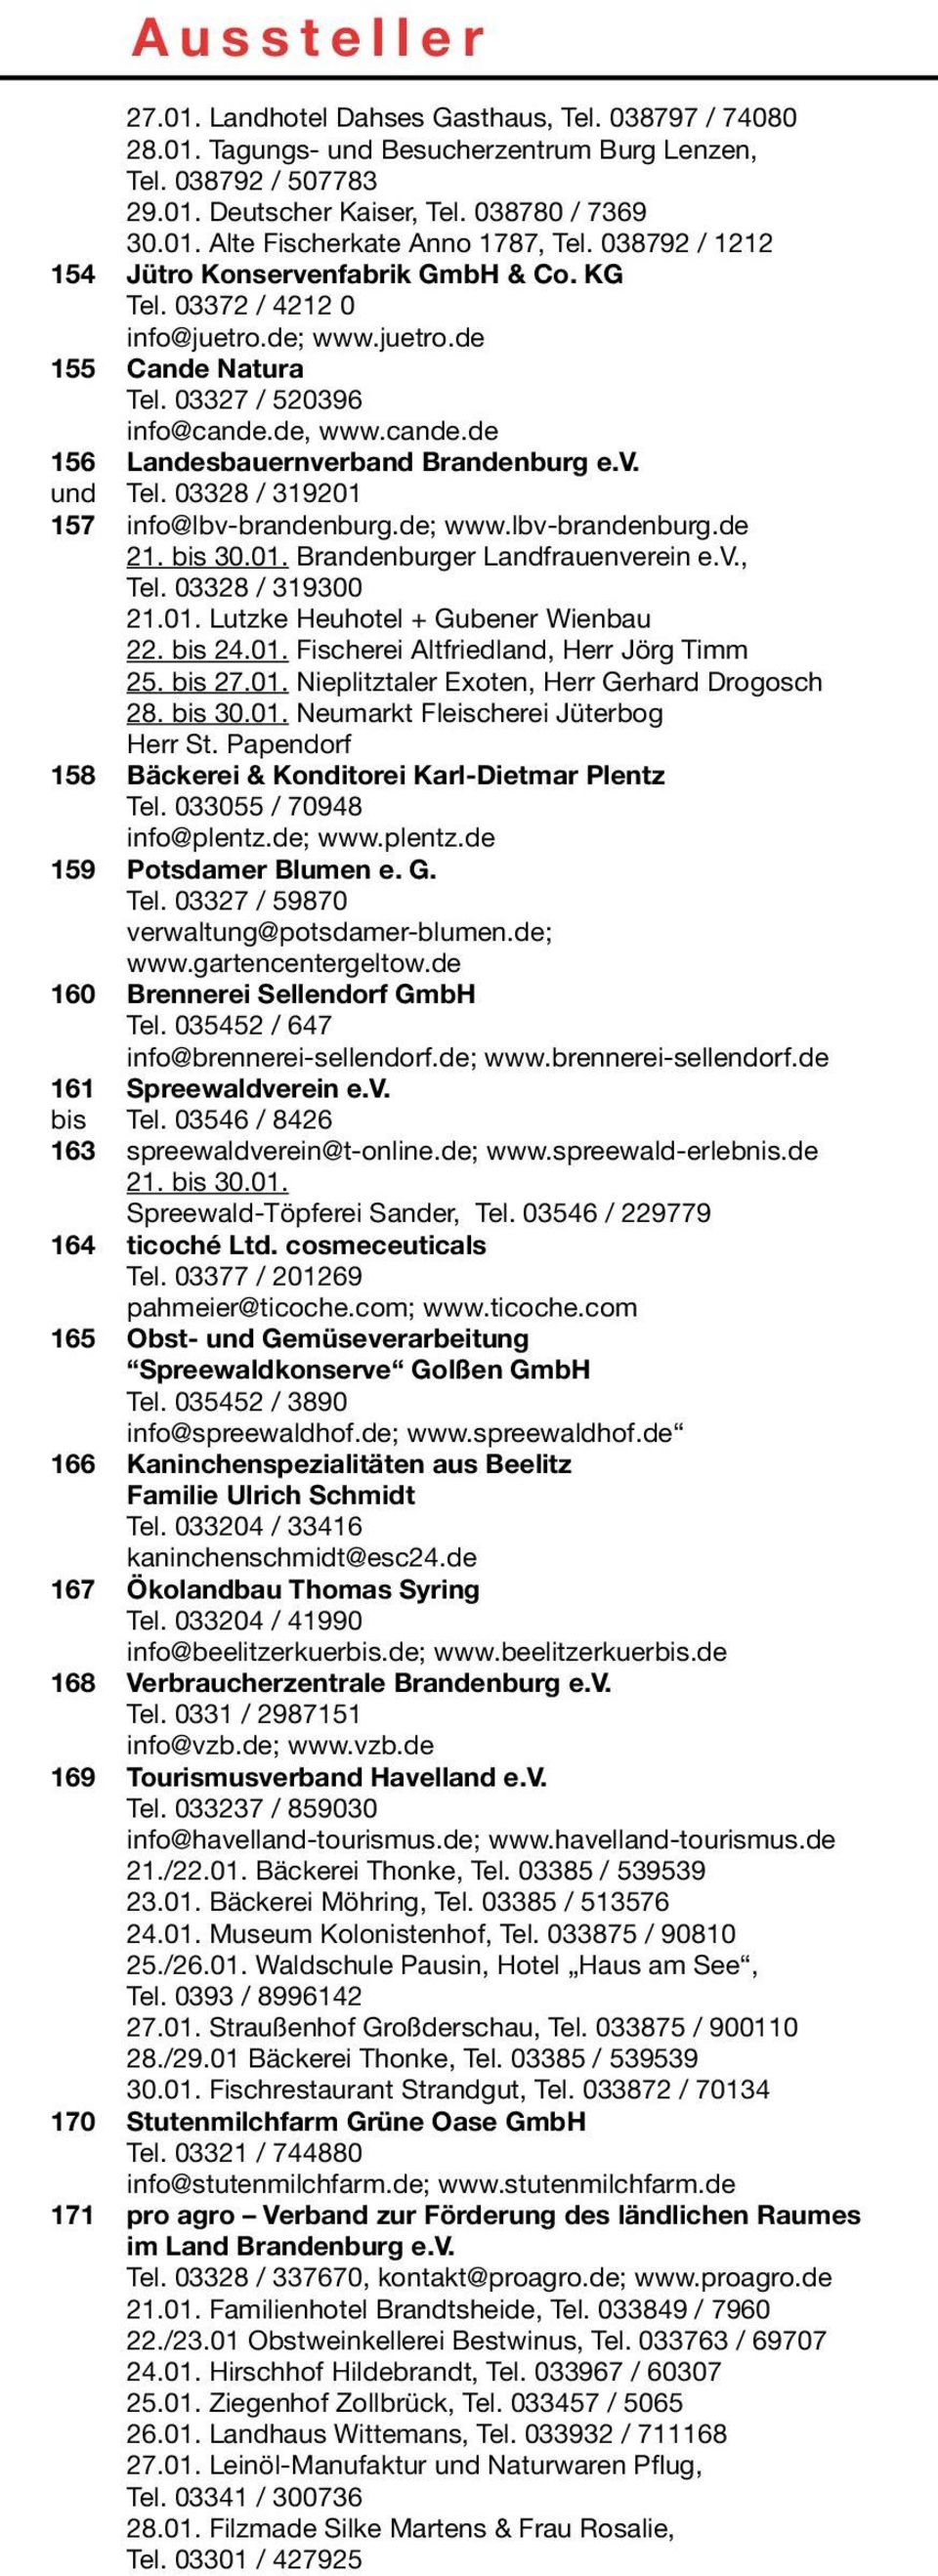 v. und Tel. 03328 / 319201 157 info@lbv-brandenburg.de; www.lbv-brandenburg.de 21. bis 30.01. Brandenburger Landfrauenverein e.v., Tel. 03328 / 319300 21.01. Lutzke Heuhotel + Gubener Wienbau 22.